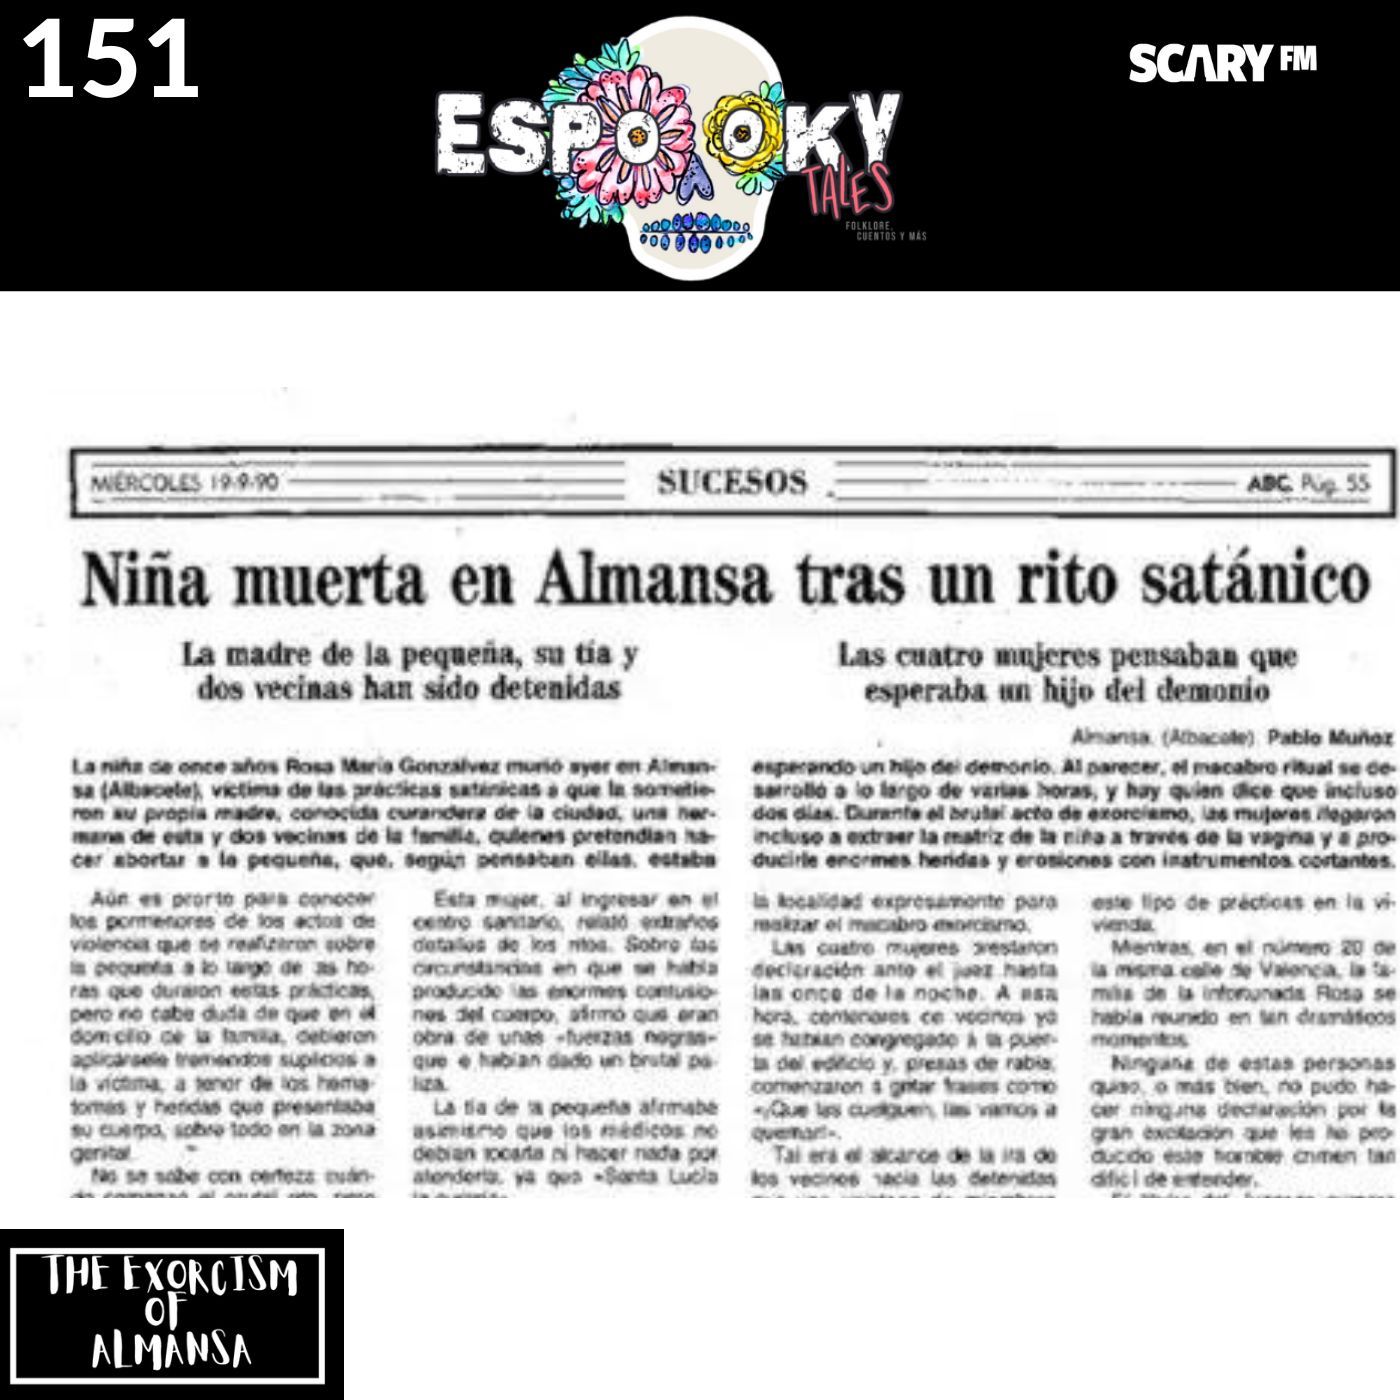 The Exorcism of Almansa